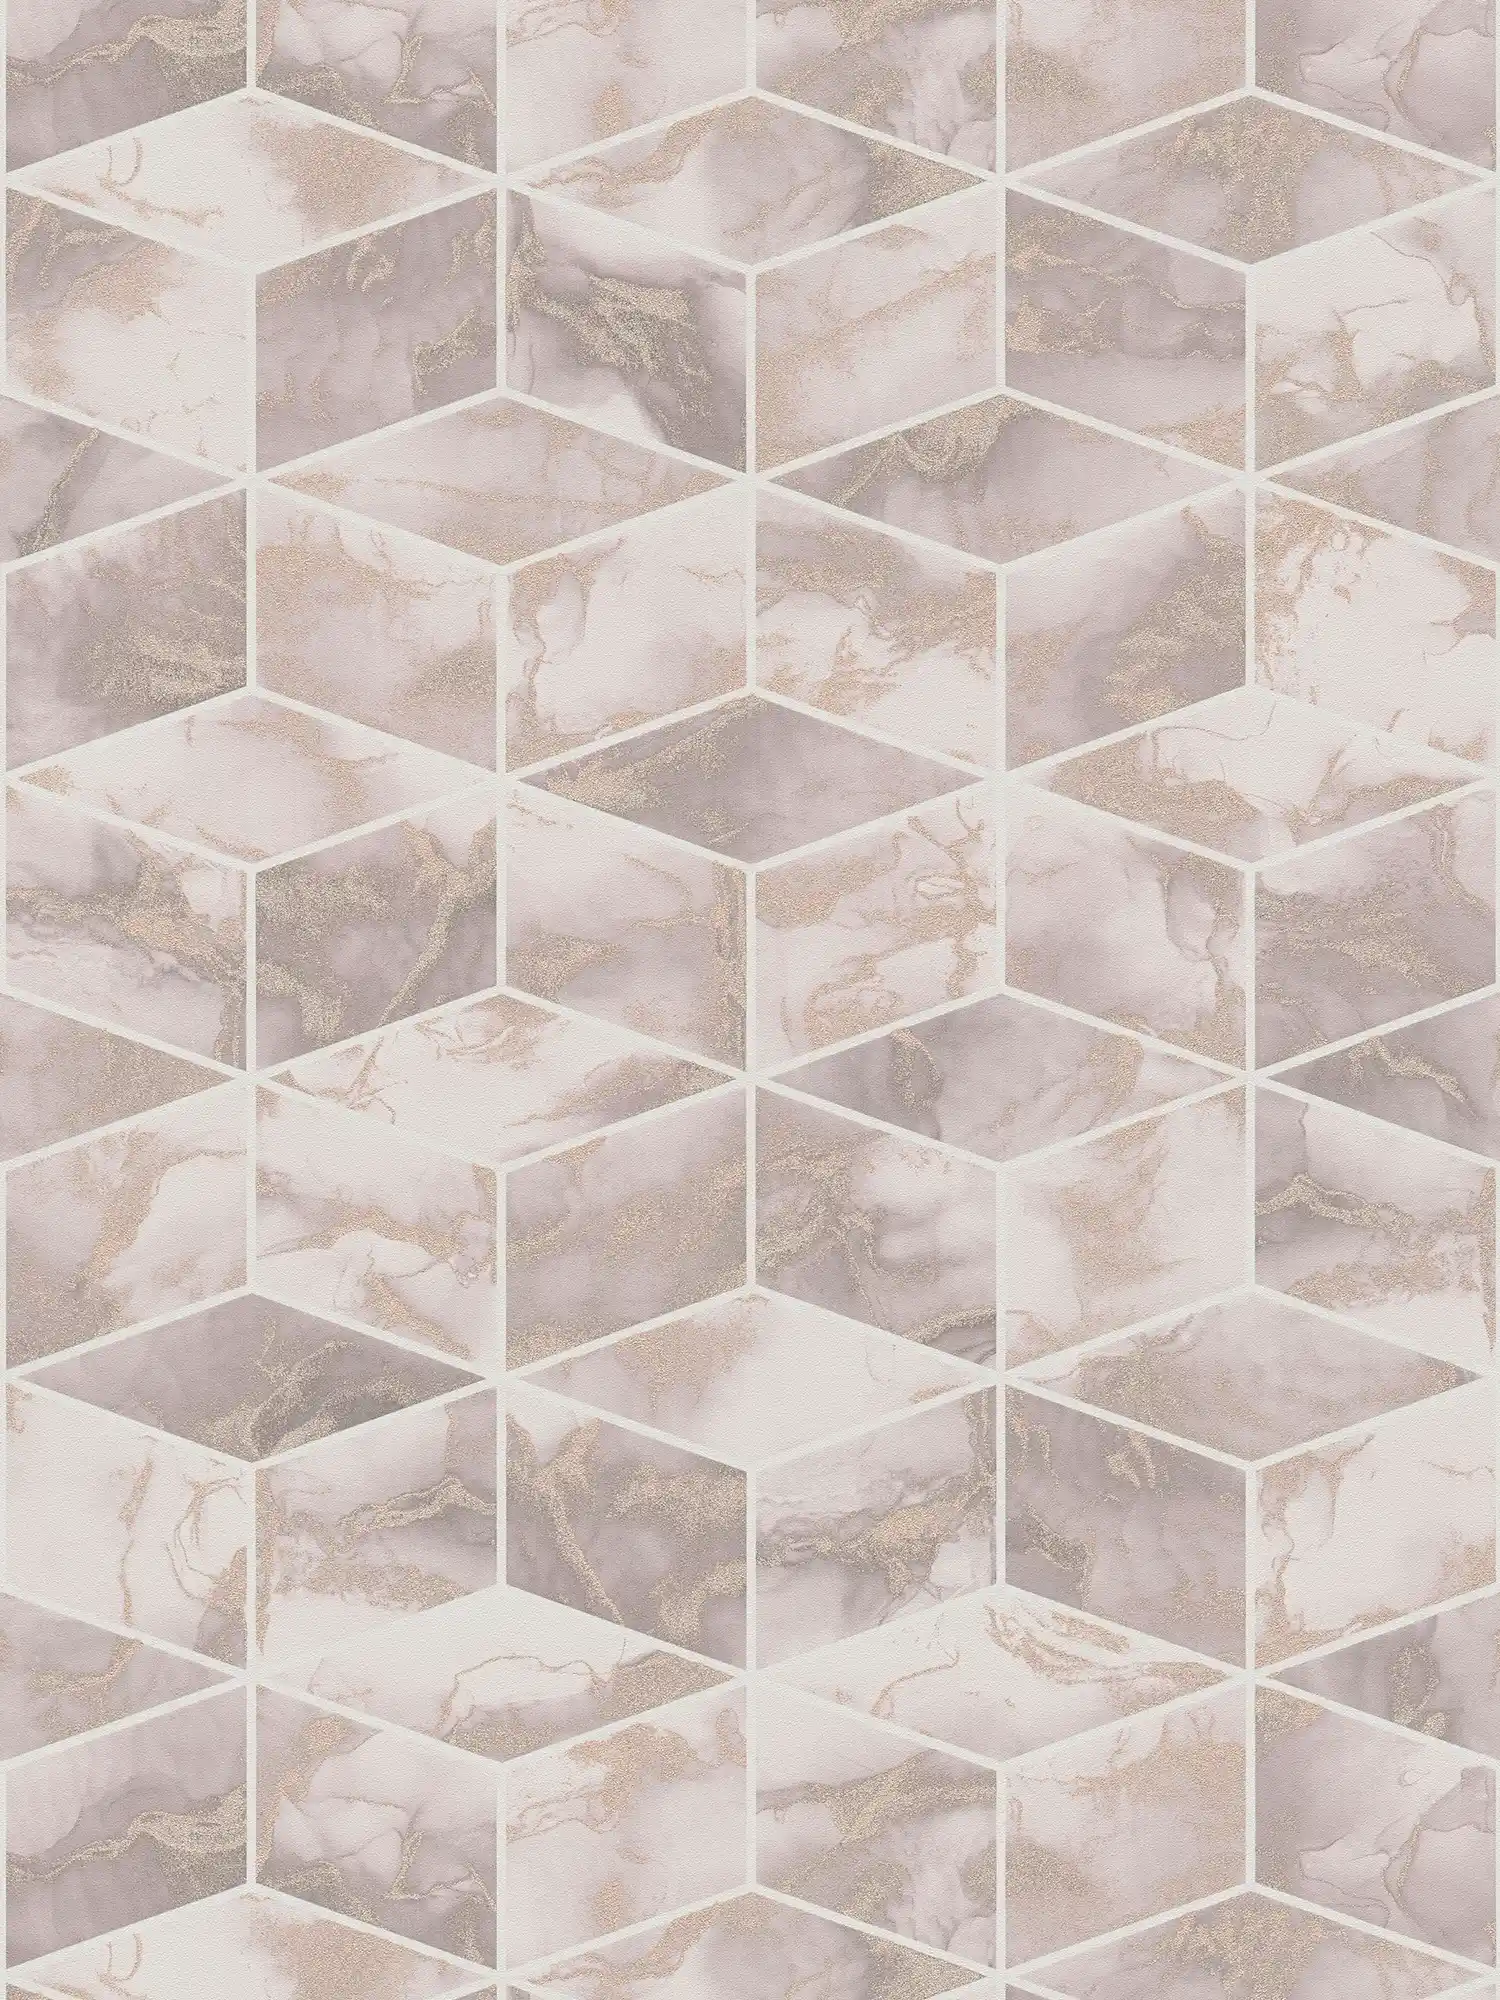 Tile wallpaper with marble & metallic effect - metallic, pink, white
